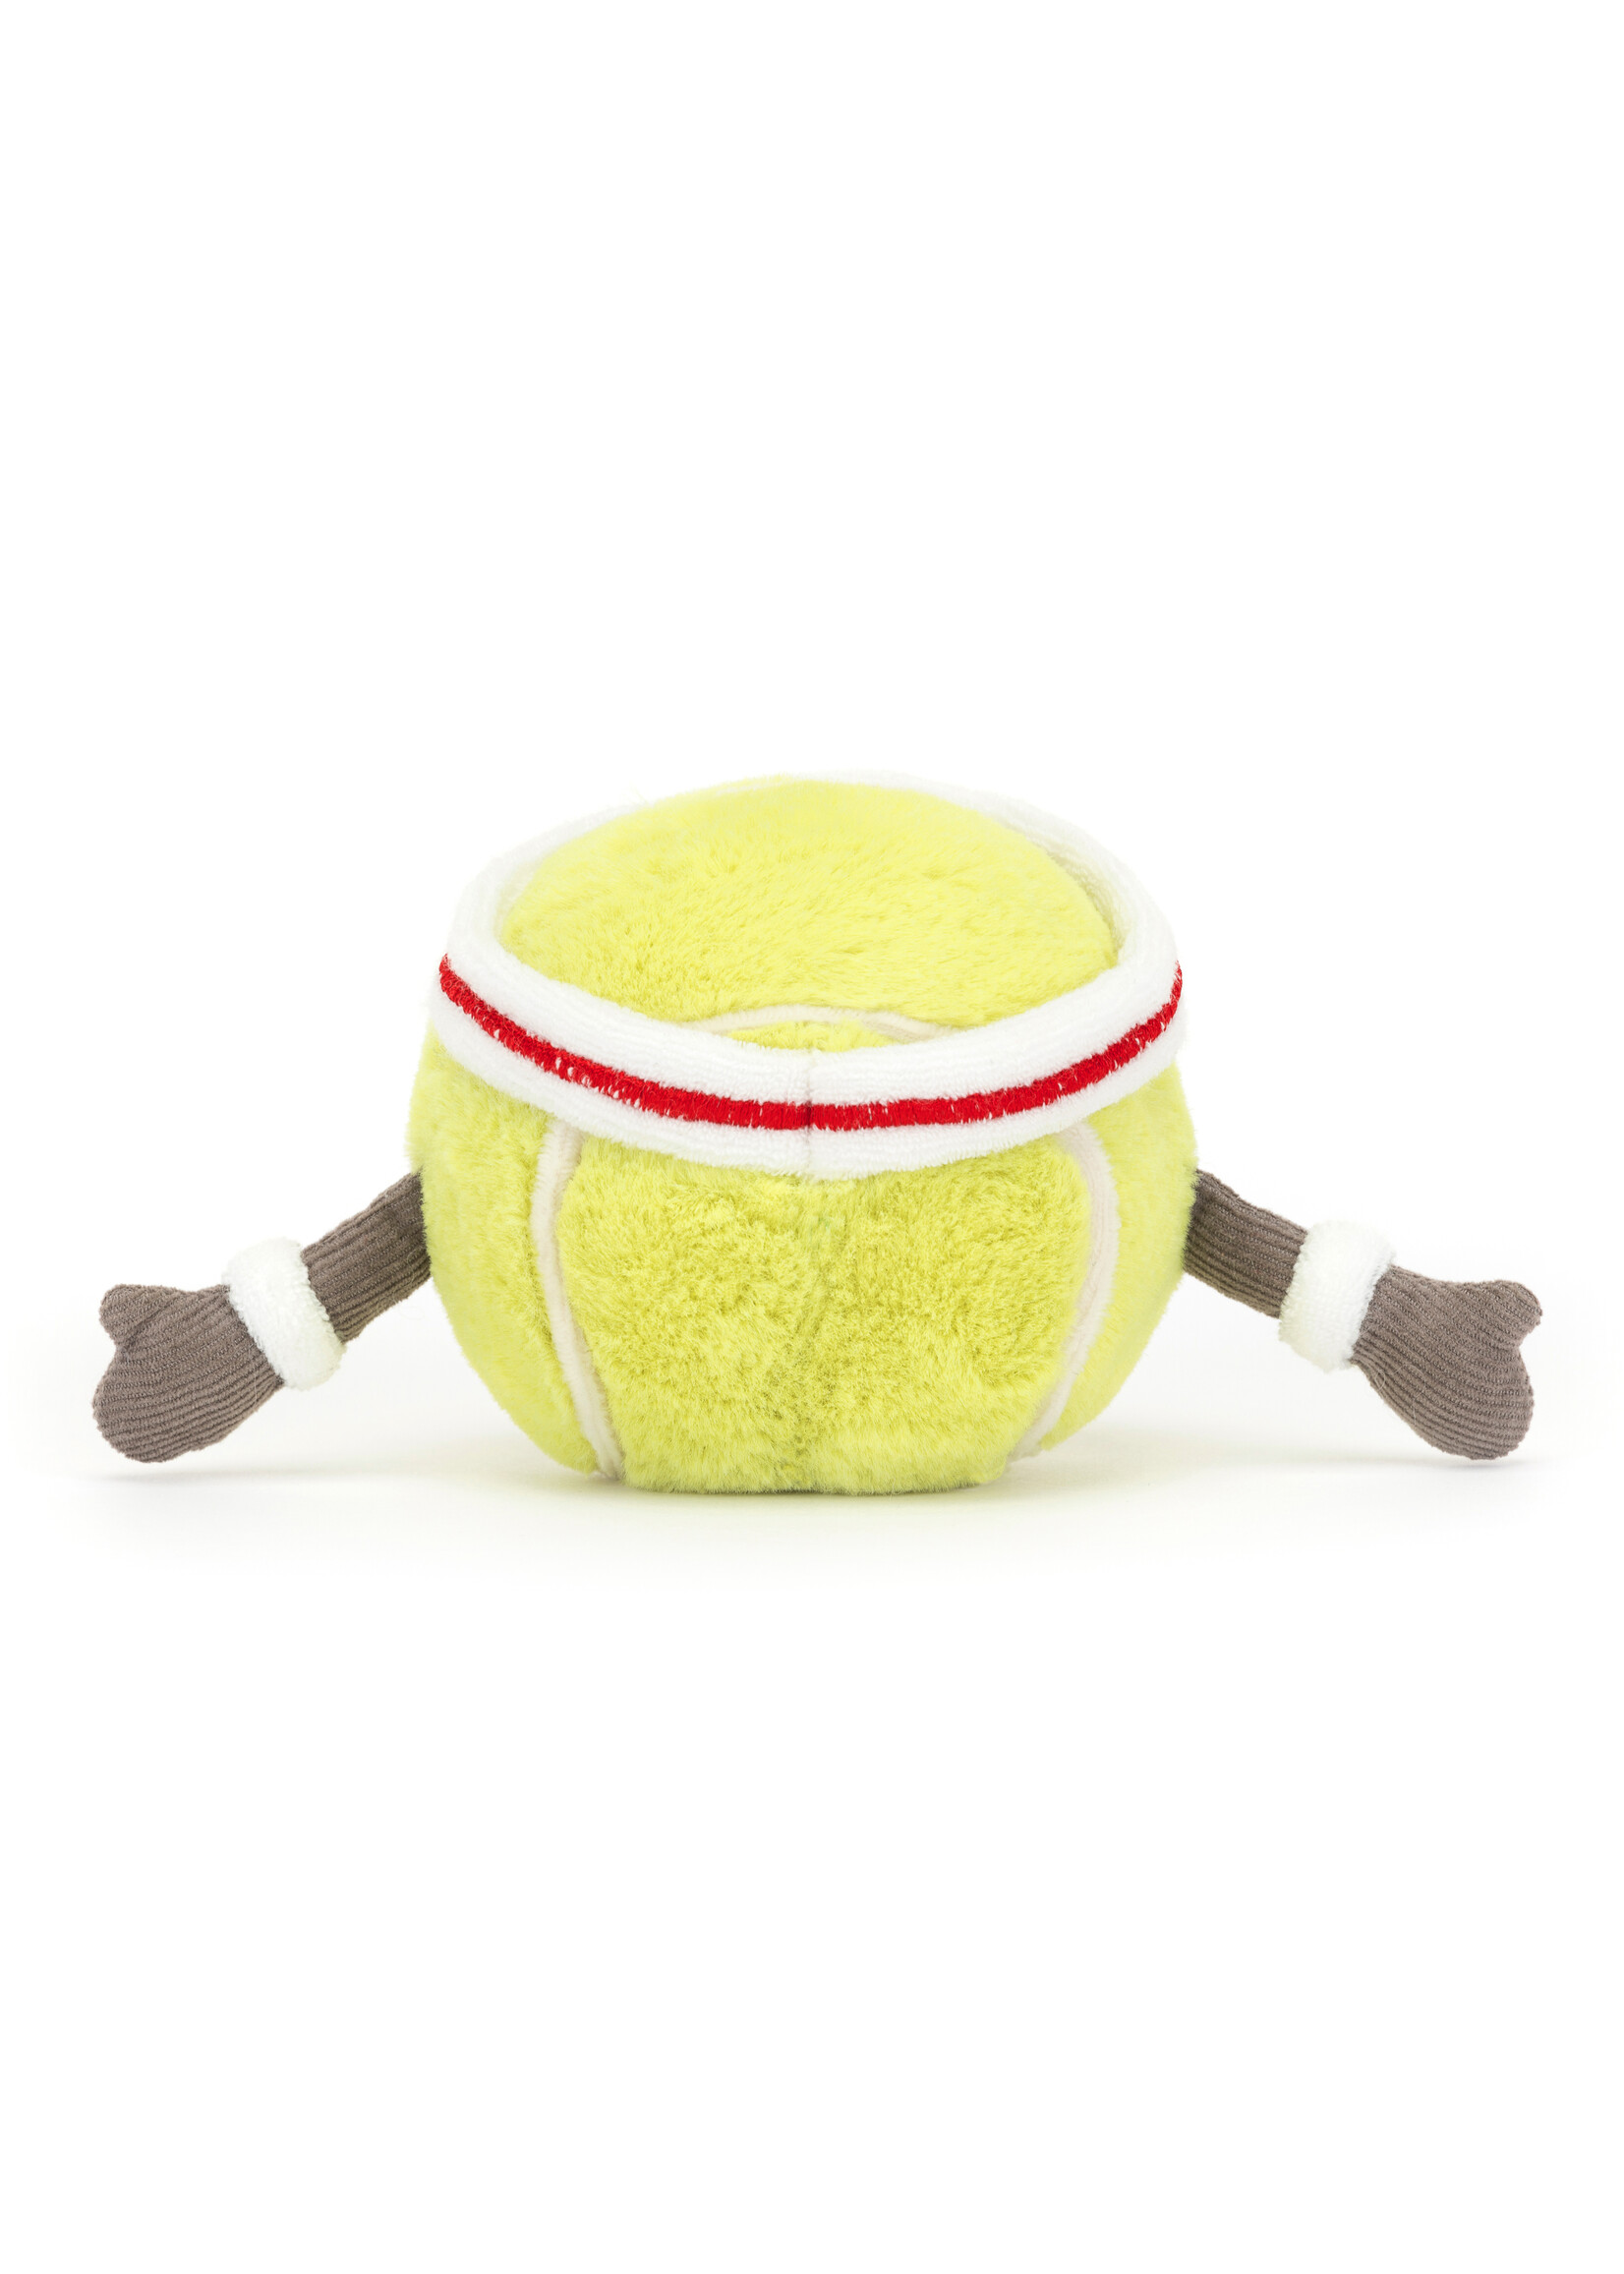 Jellycat Amuseable Sports - Tennis Ball